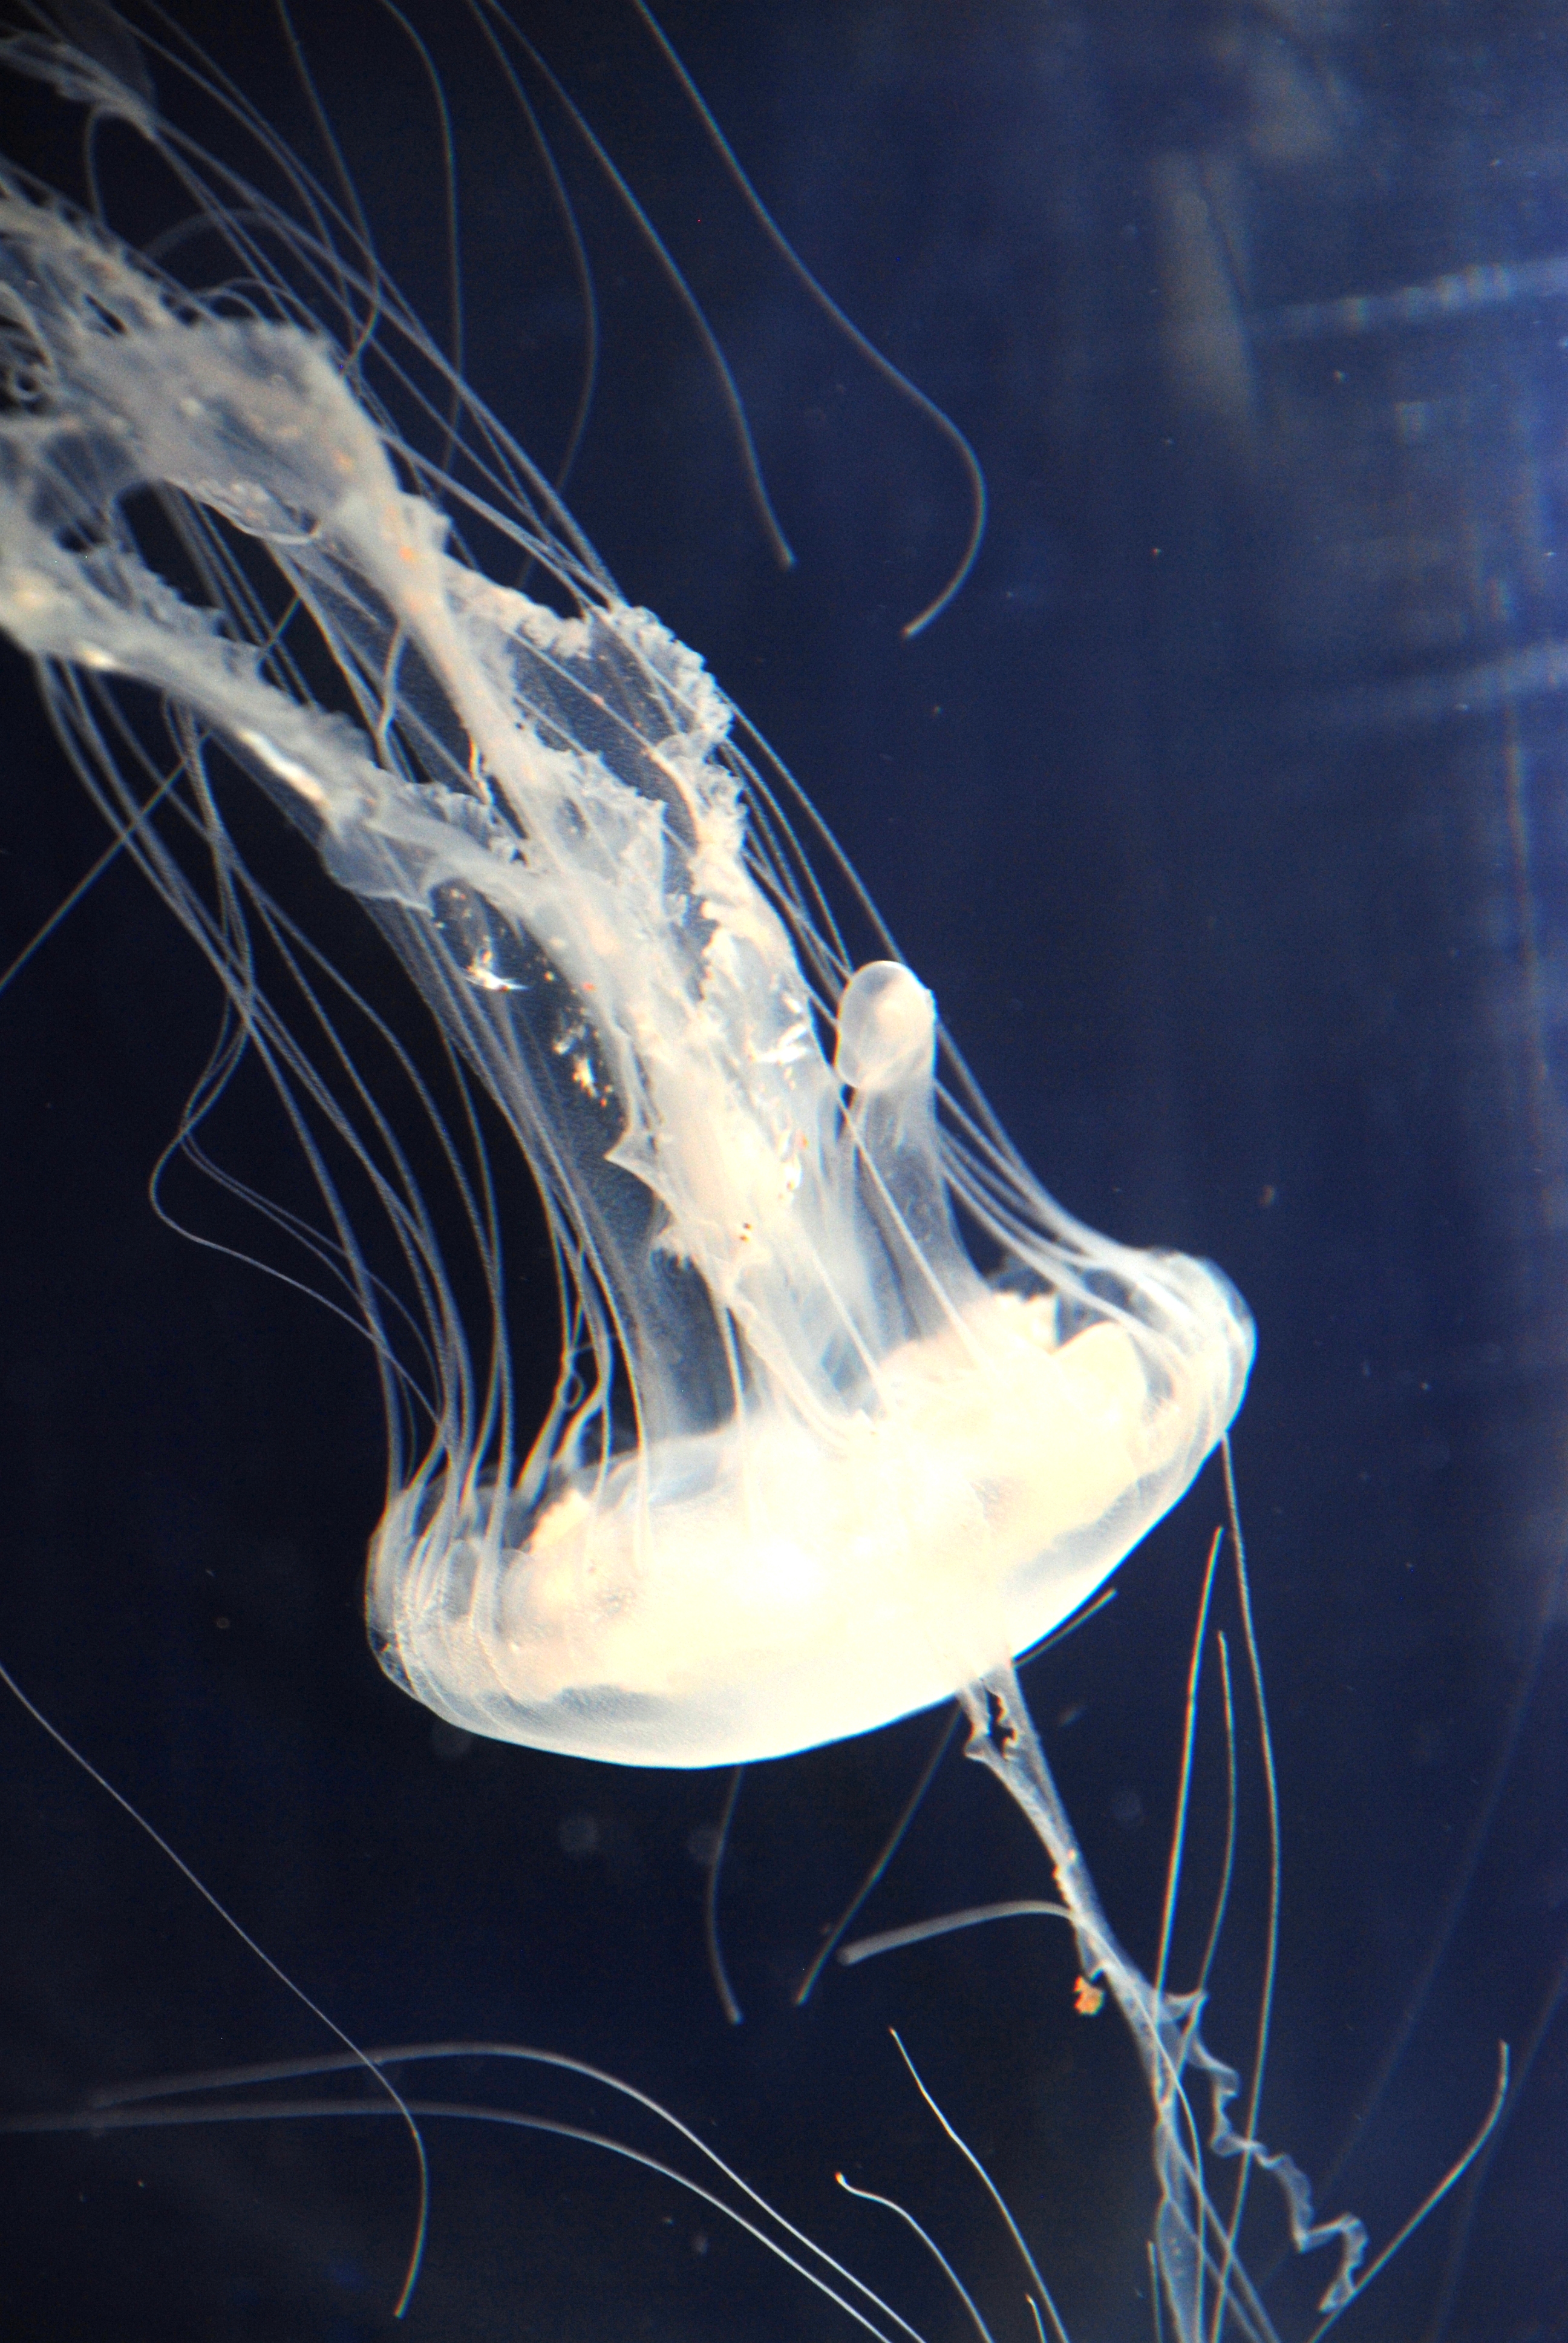 sea nettle jellyfish classification